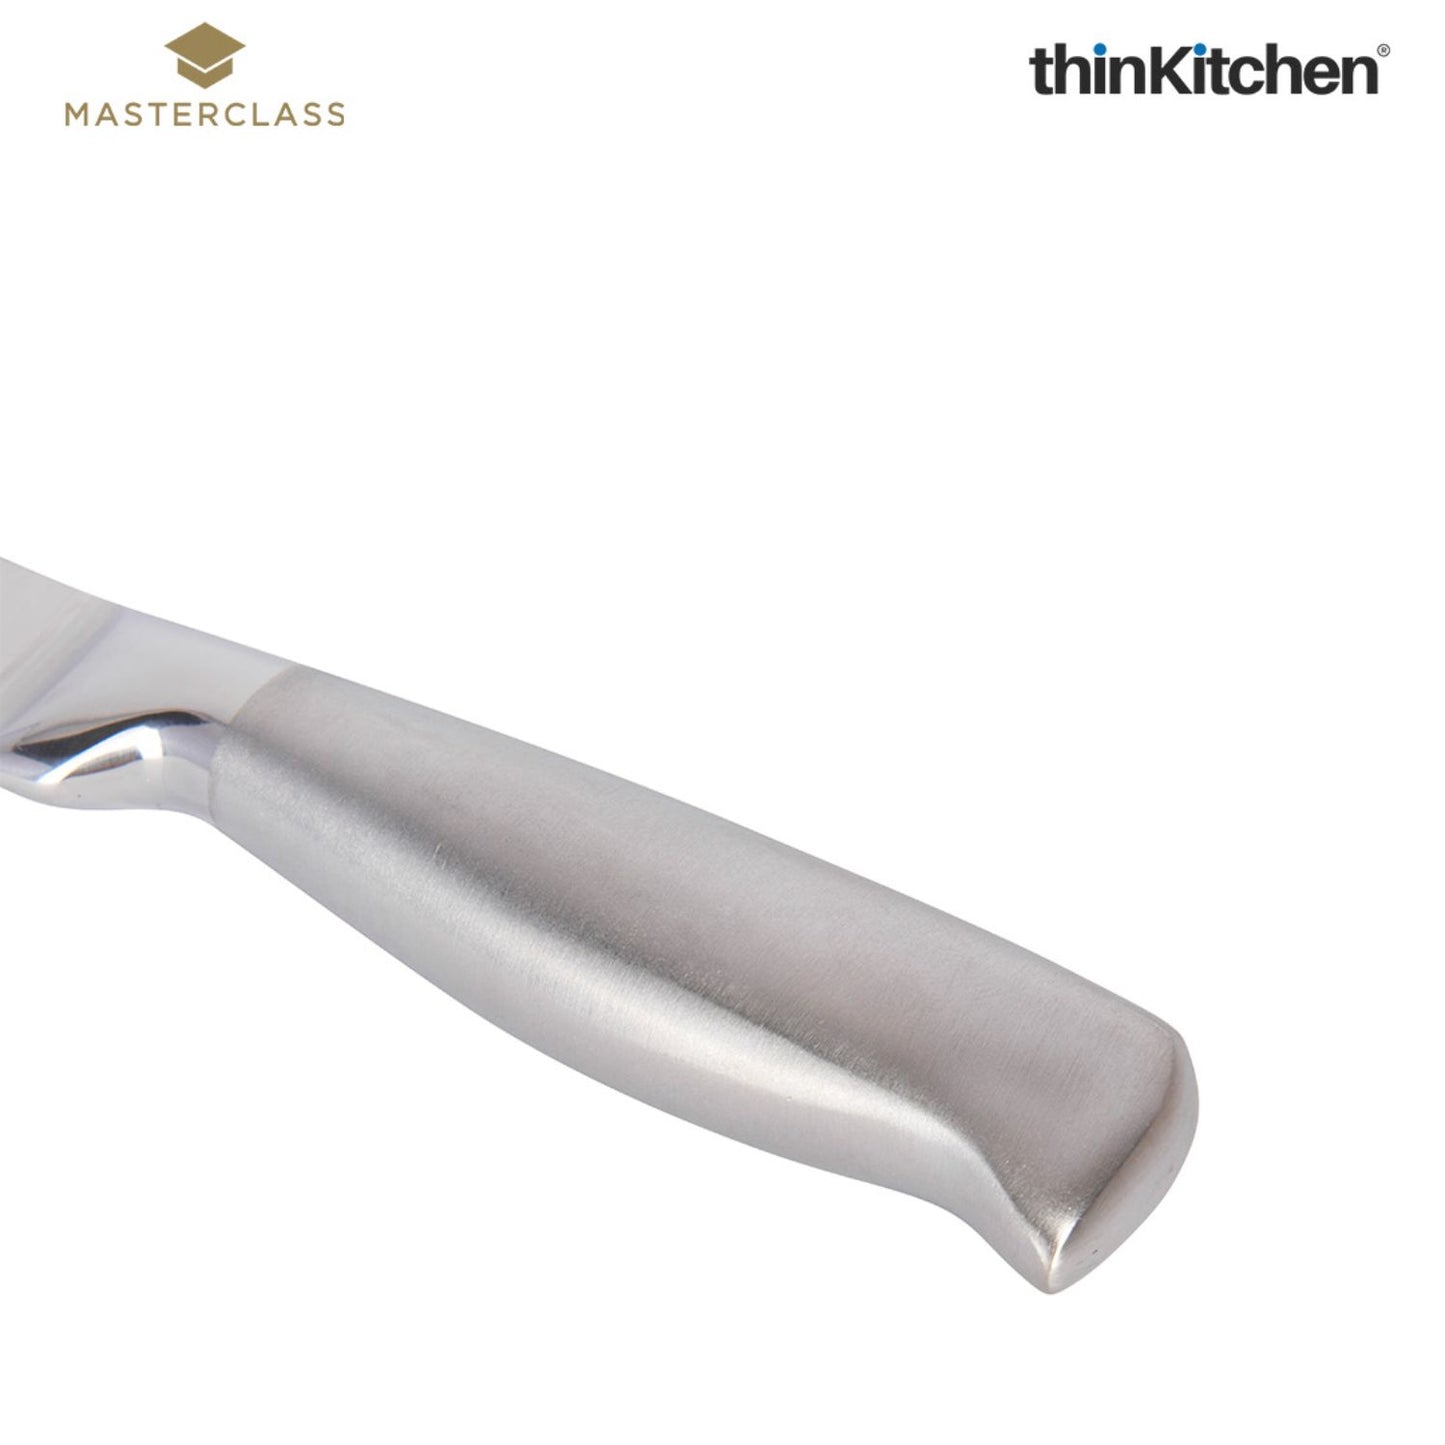 Masterclass Acero Utility Knife 12cm